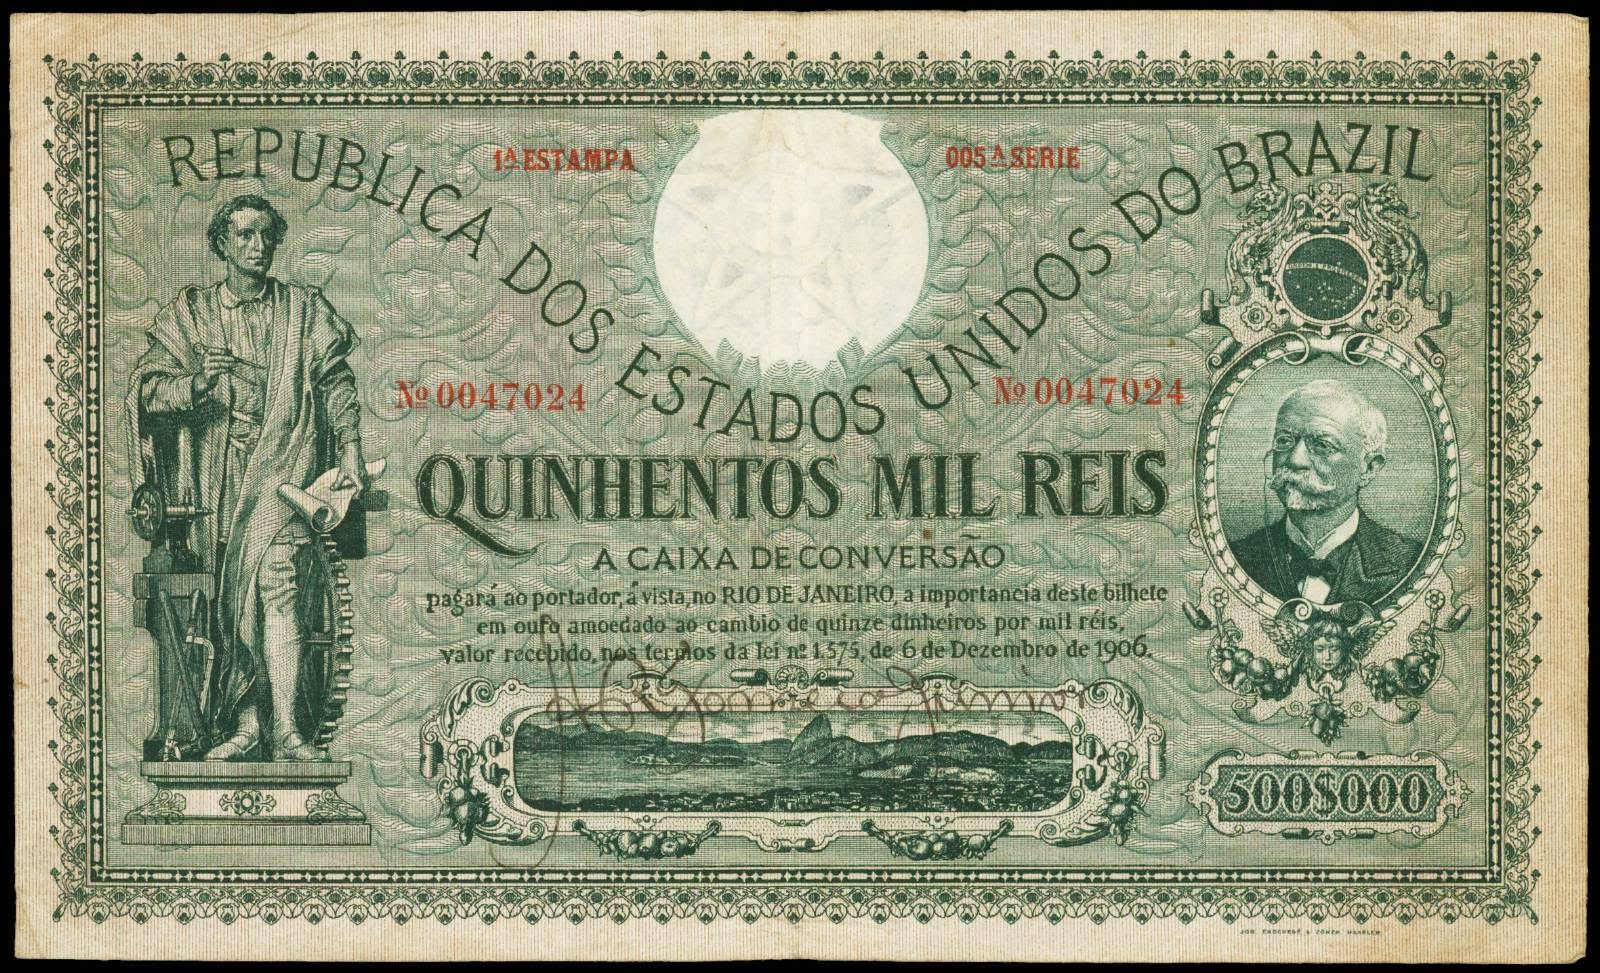 Brazil banknotes 500 Mil Reis Caixa de Conversao, Afonso Pena